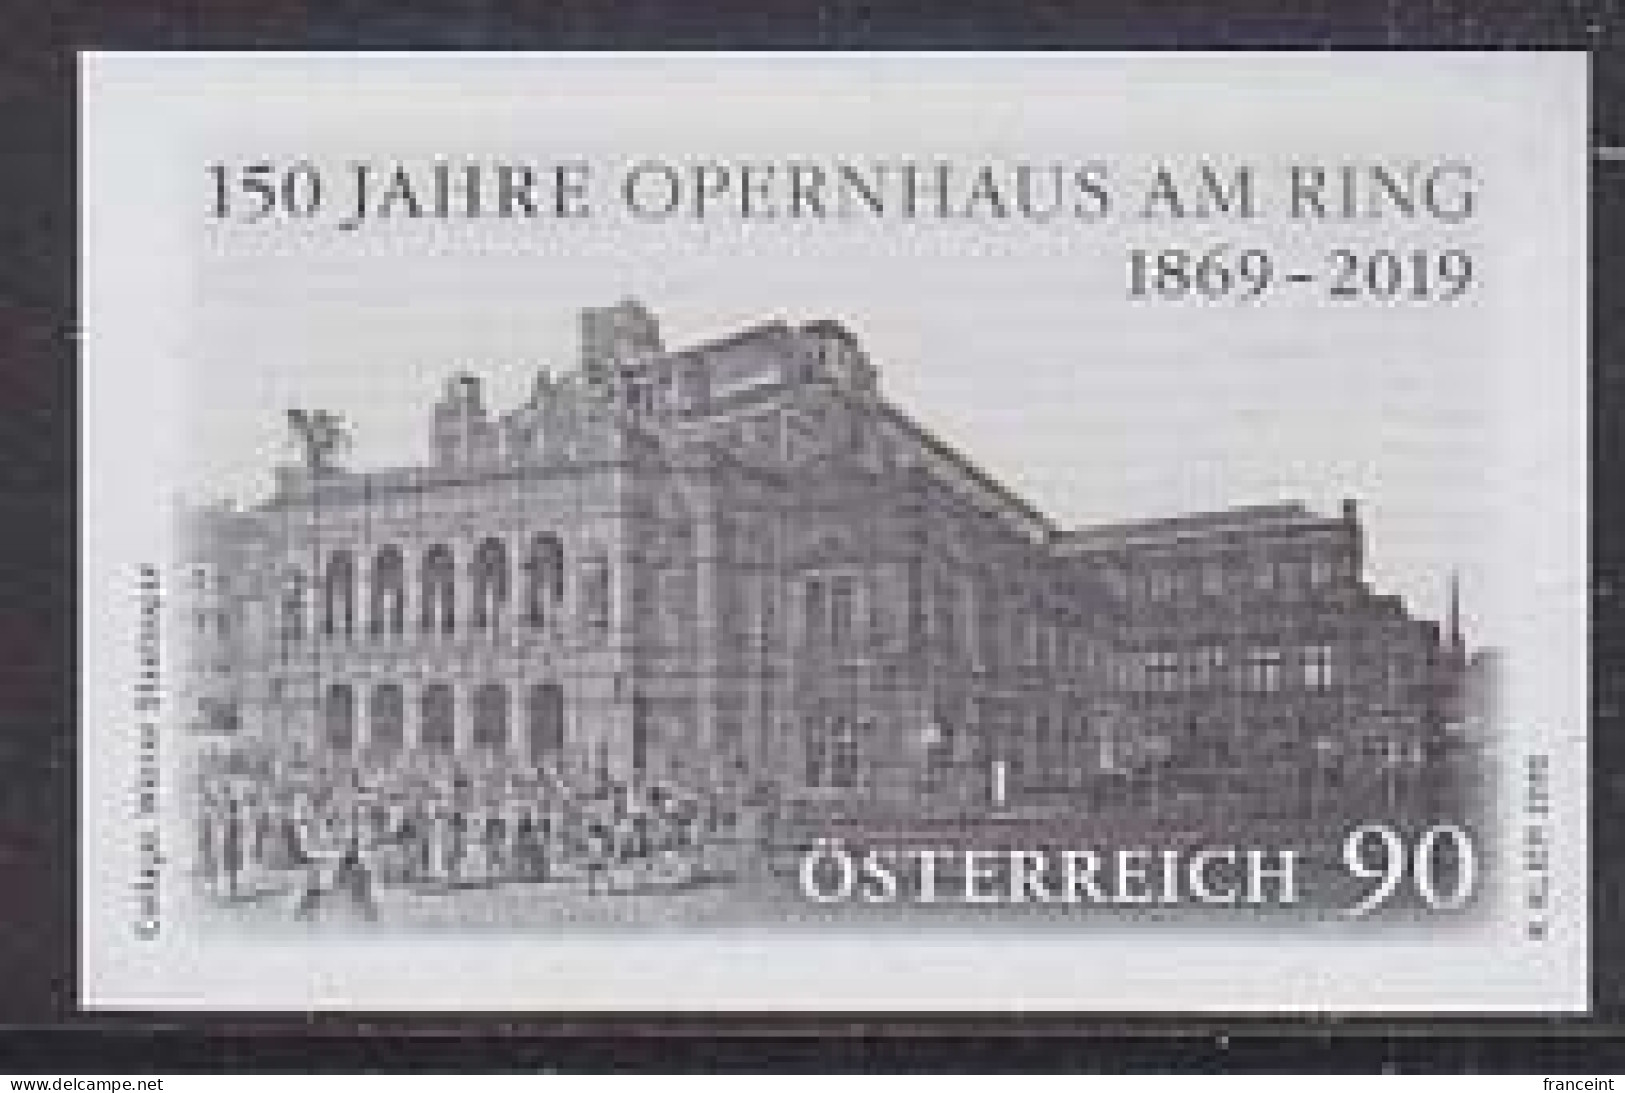 AUSTRIA(2019) Vienna Opera House. Black Print. - Proeven & Herdruk